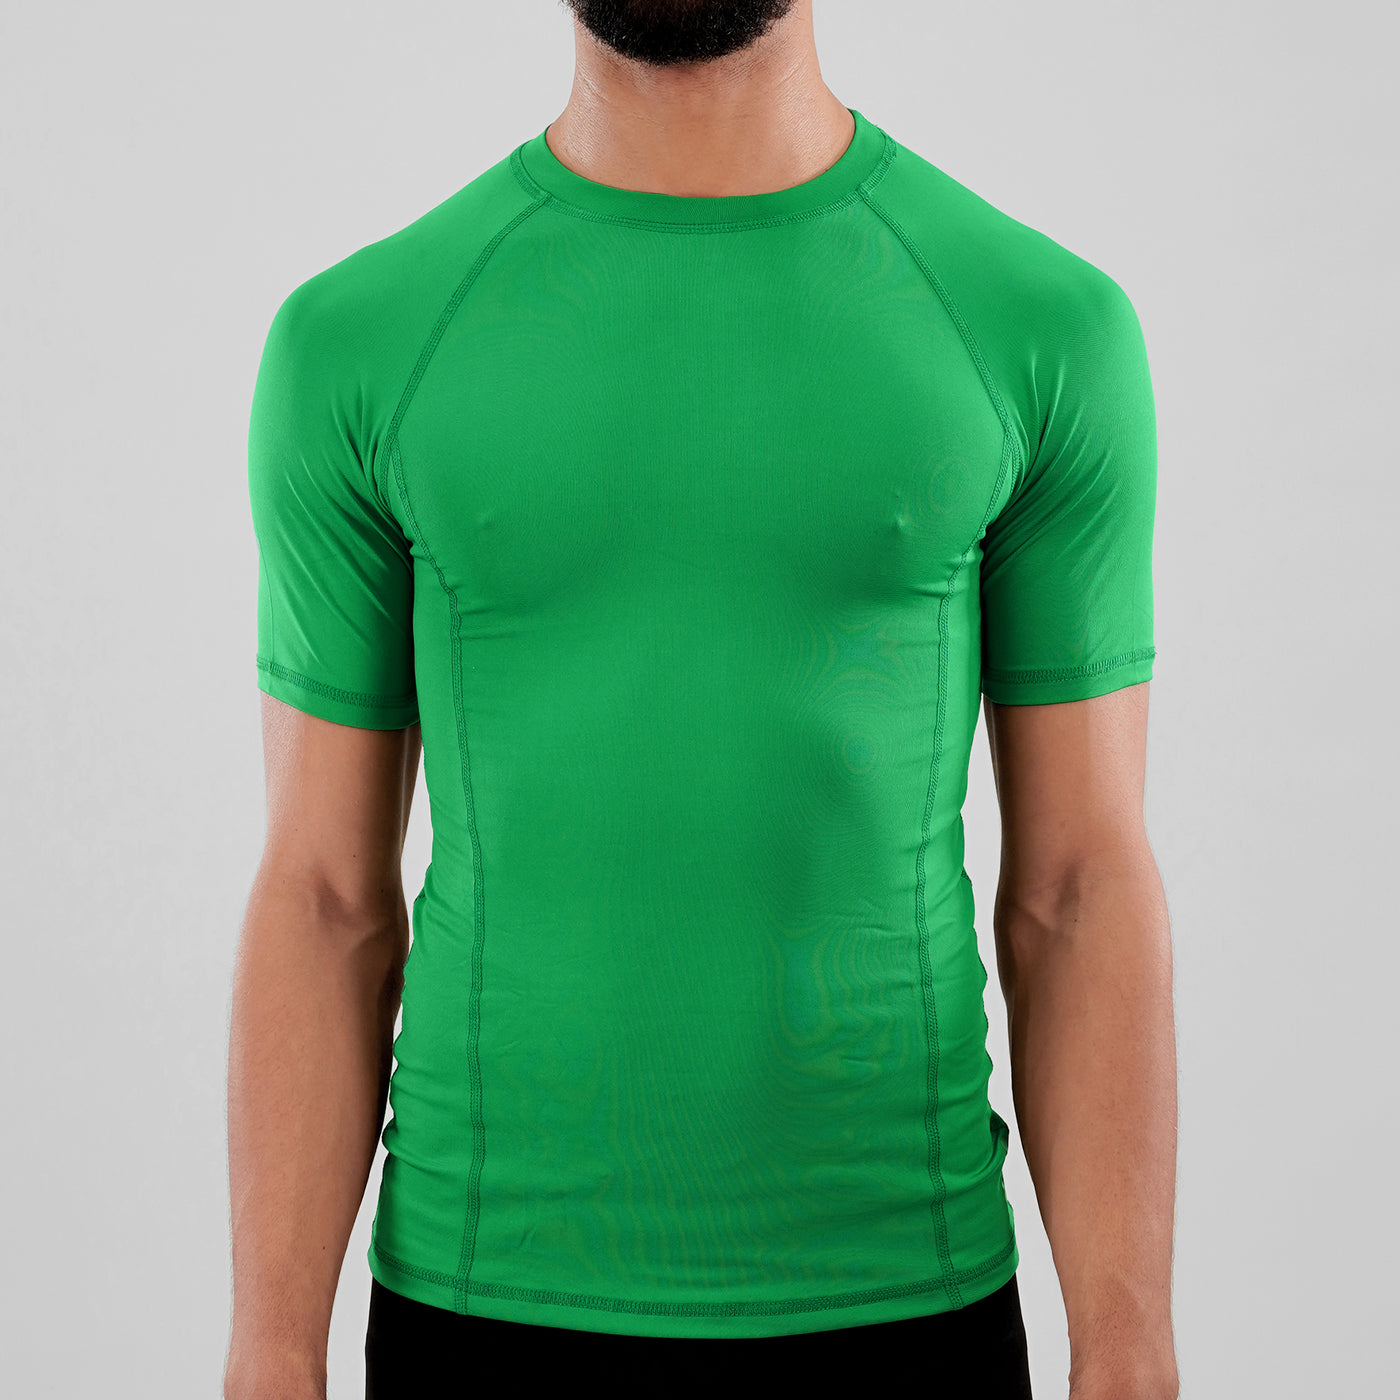 Hue Green Compression Shirt